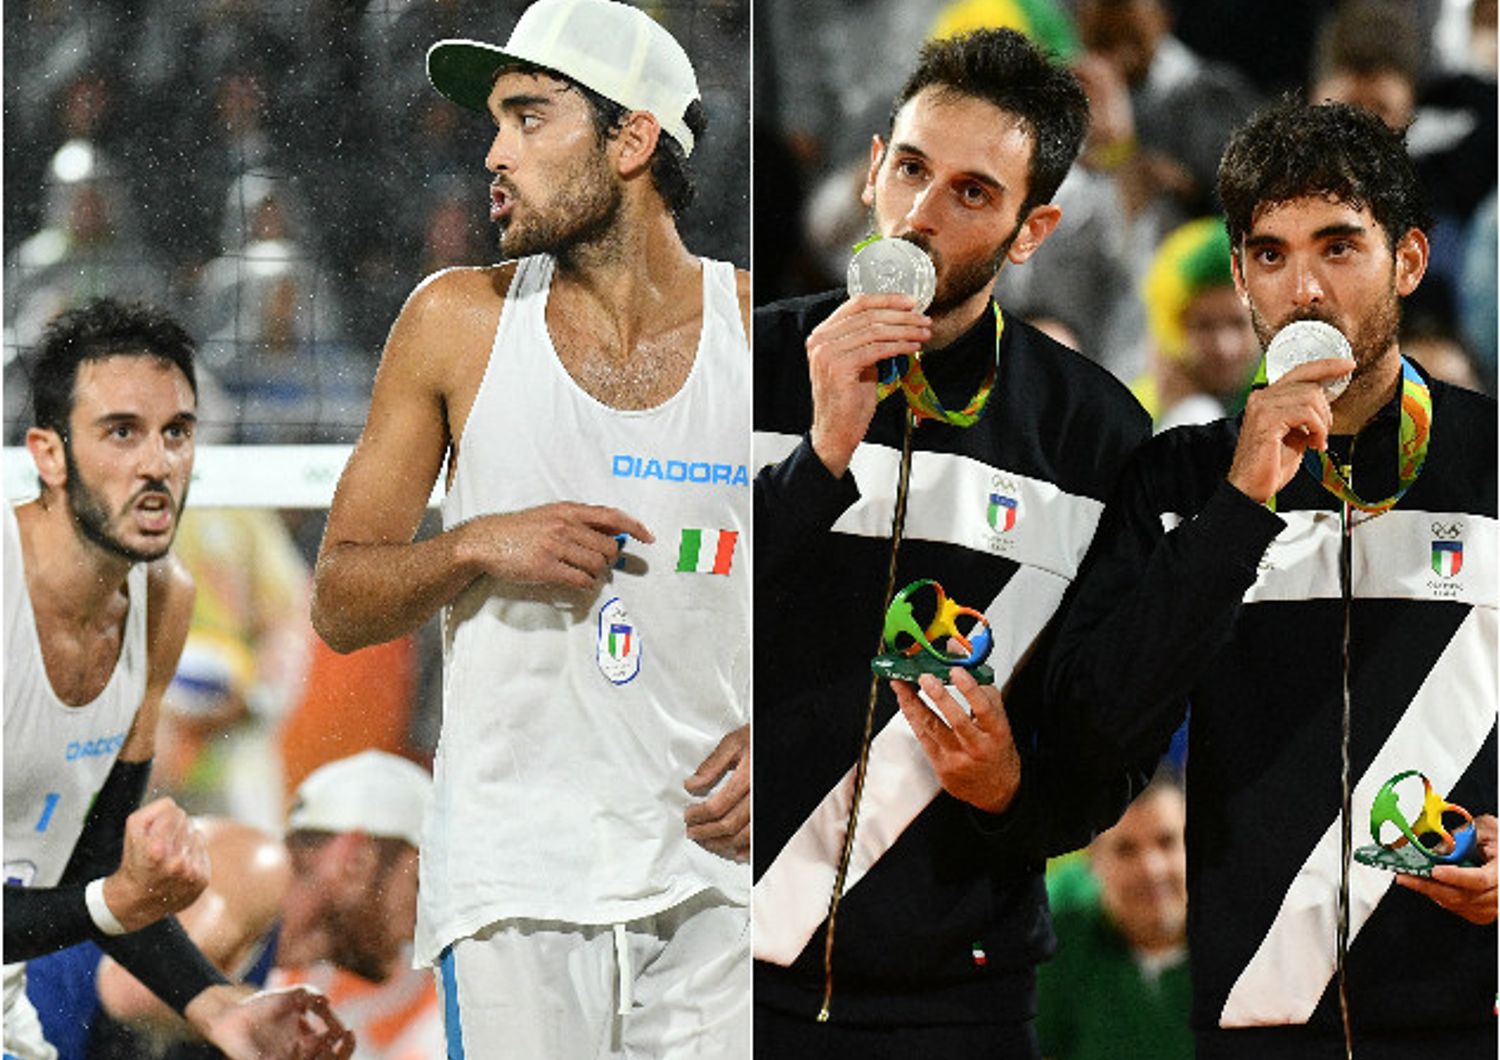 Paolo Nicolai e Daniele Lupo  medaglia d'argento al Beach volley(Afp)&nbsp;